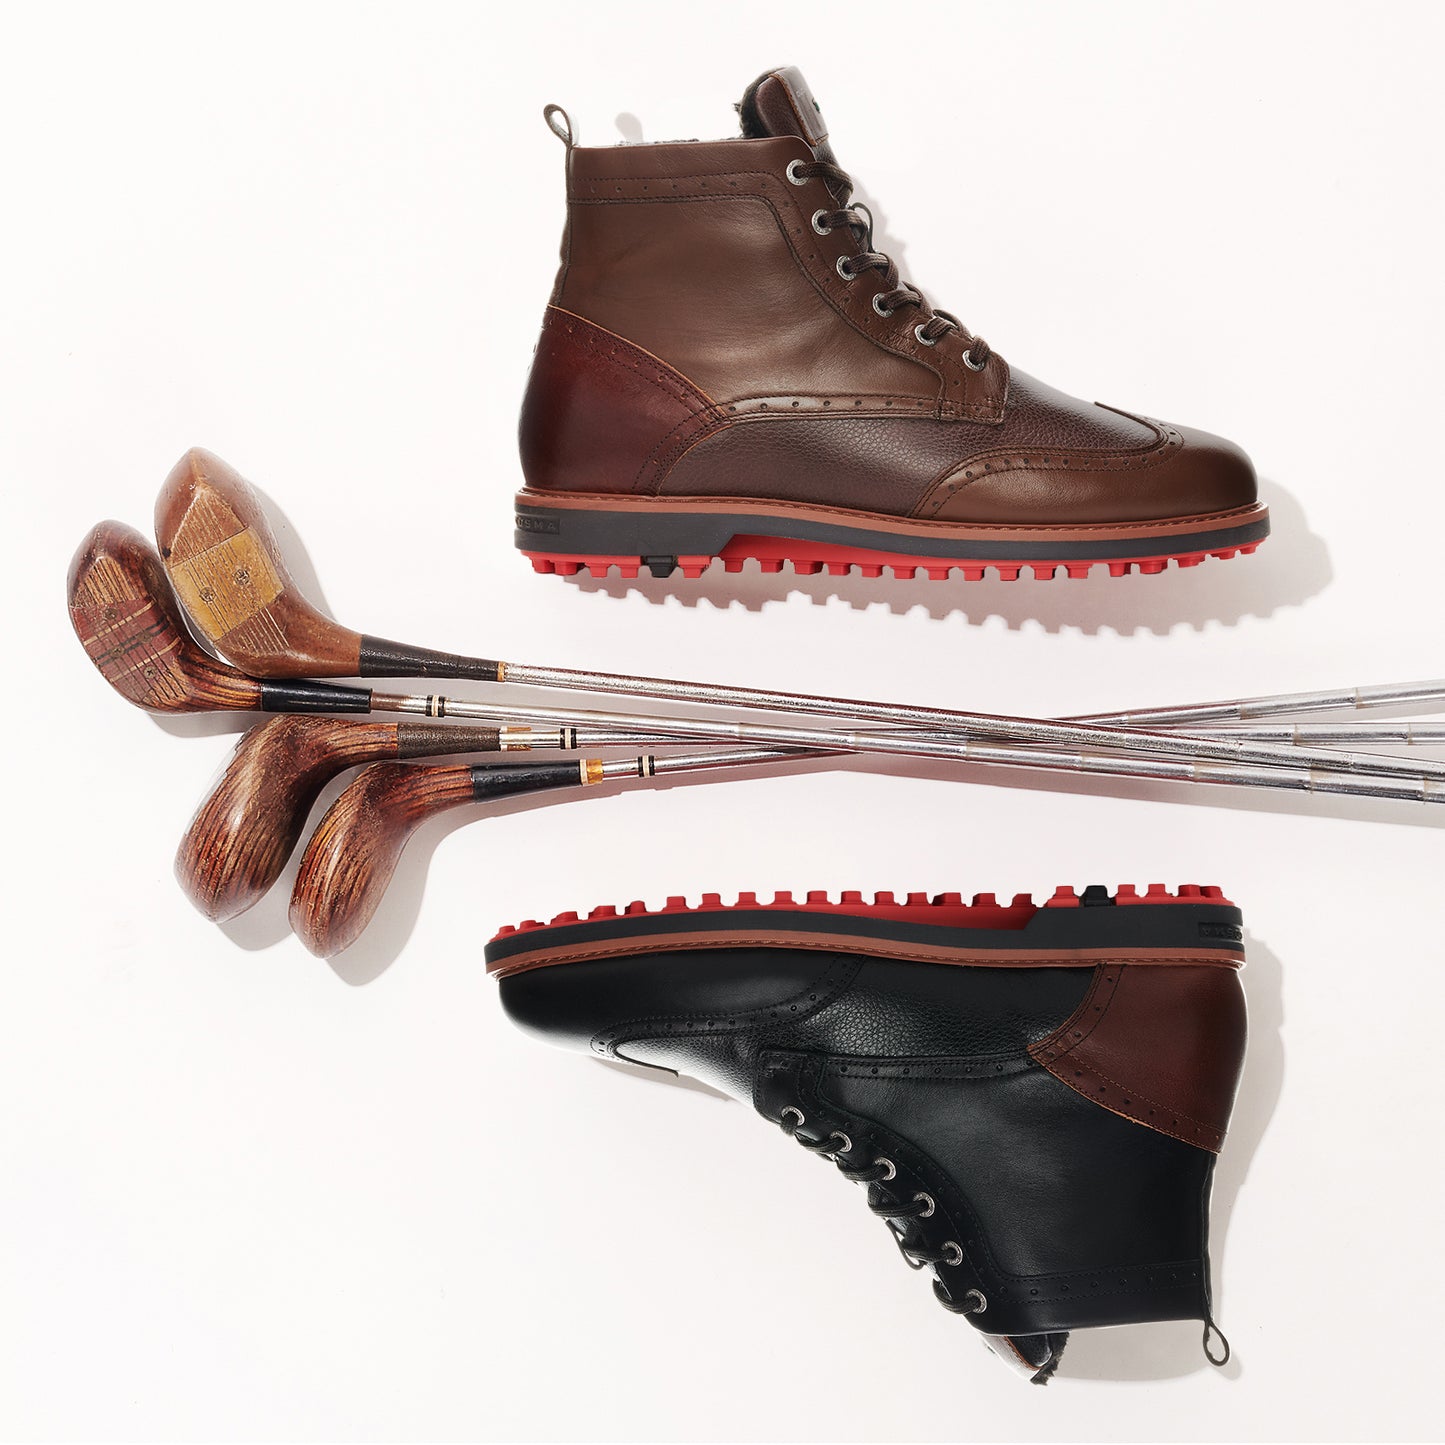 Duca del cosma Delago brown men's golf shoes are the best waterproof winter golf boots for men's